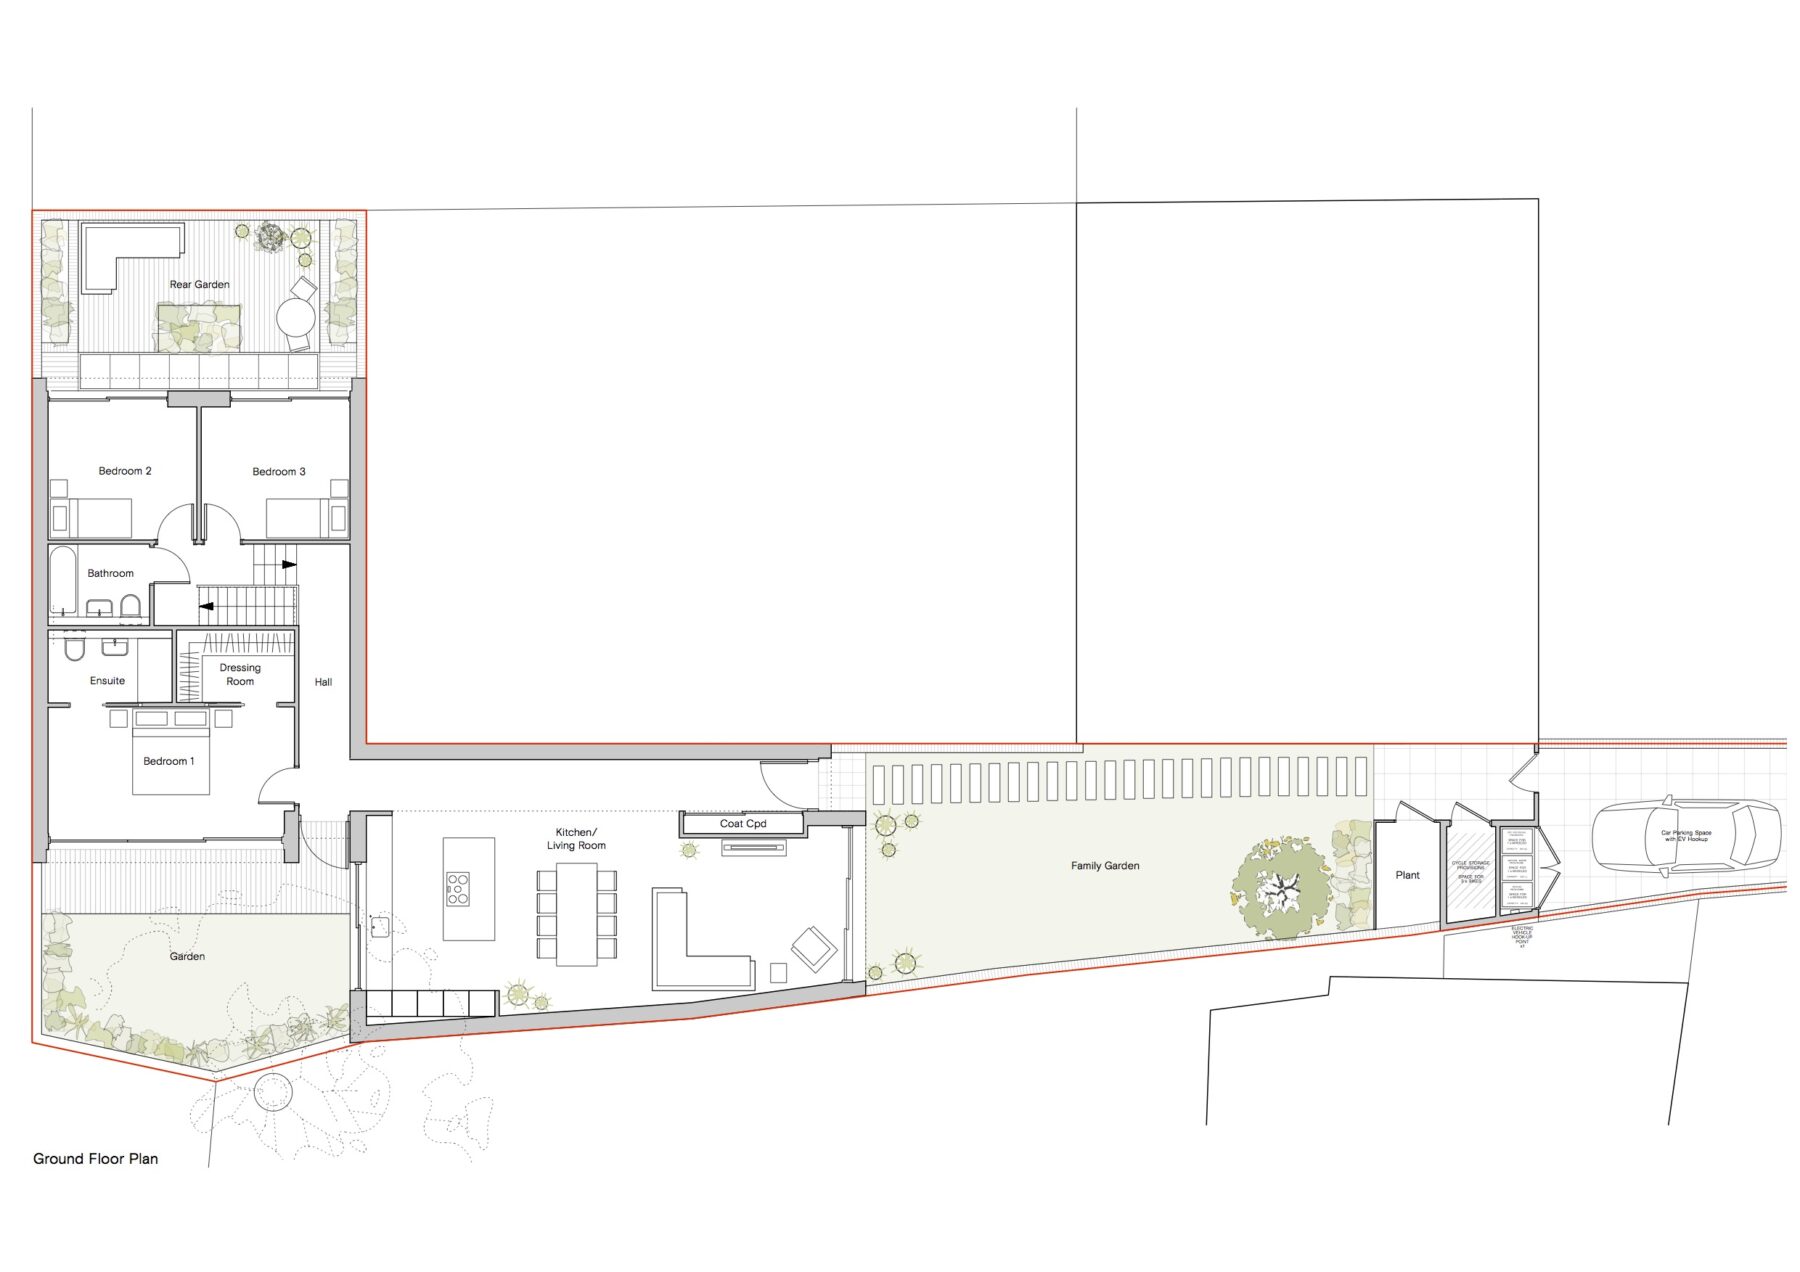 Proposed ground floor plan of development